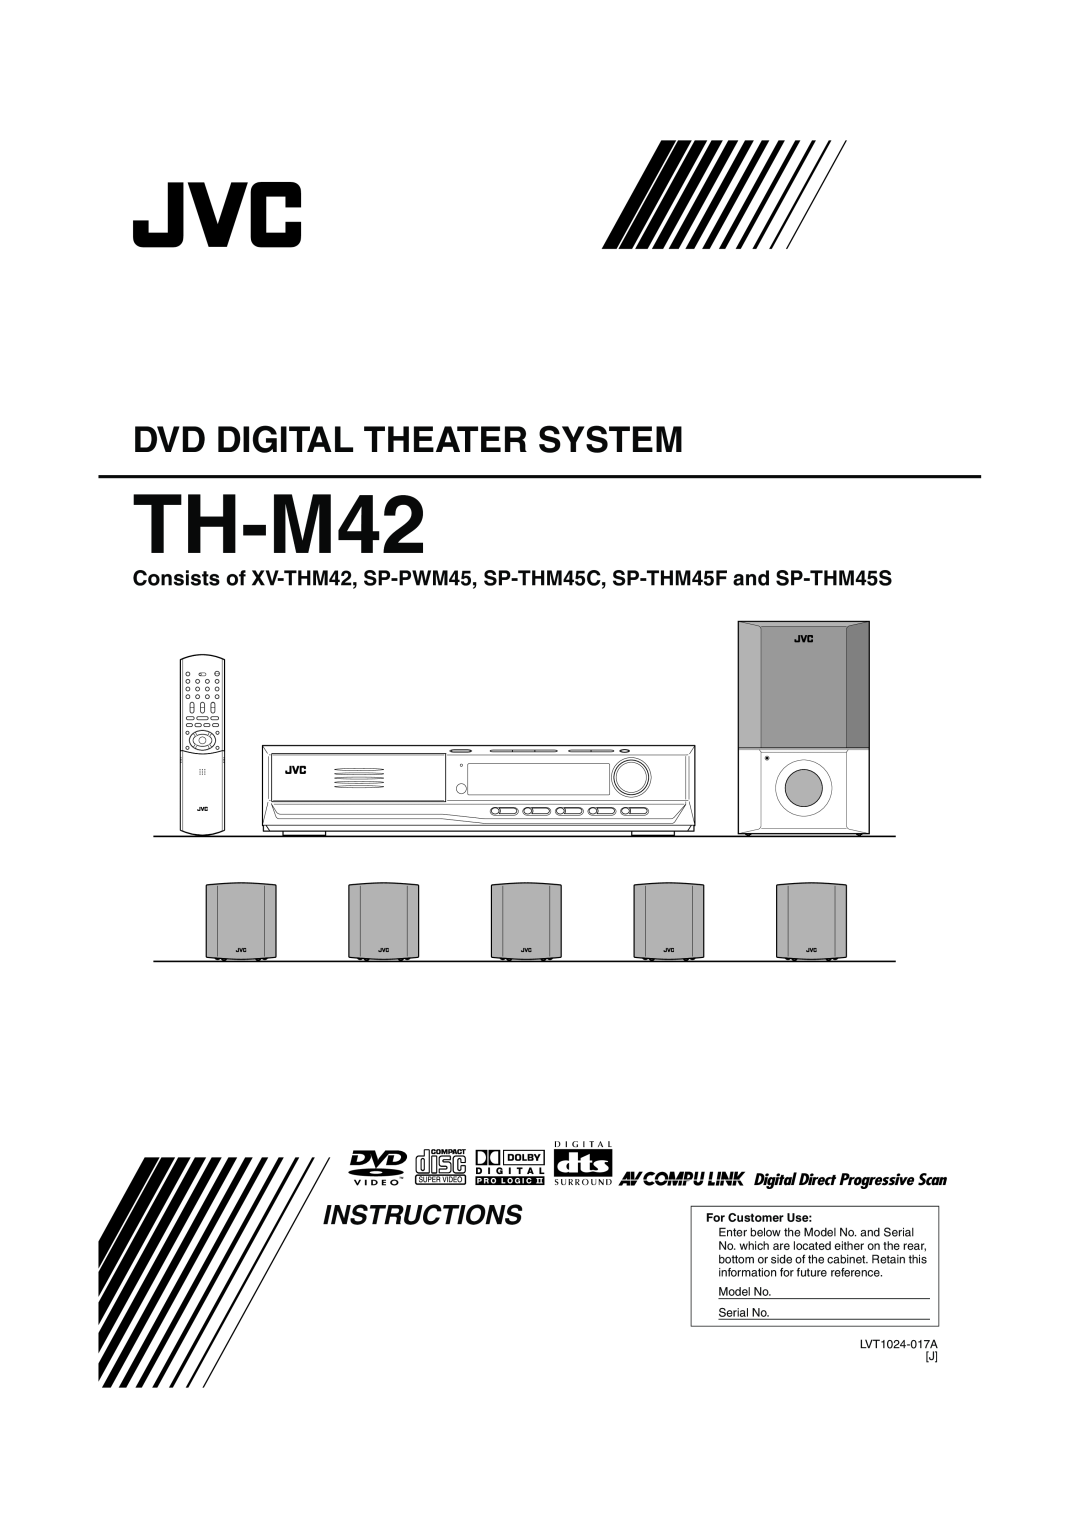 JVC TH-M42 manual Dvd Digital Theater System, Instructions, For Customer Use, LVT1024-017A J 